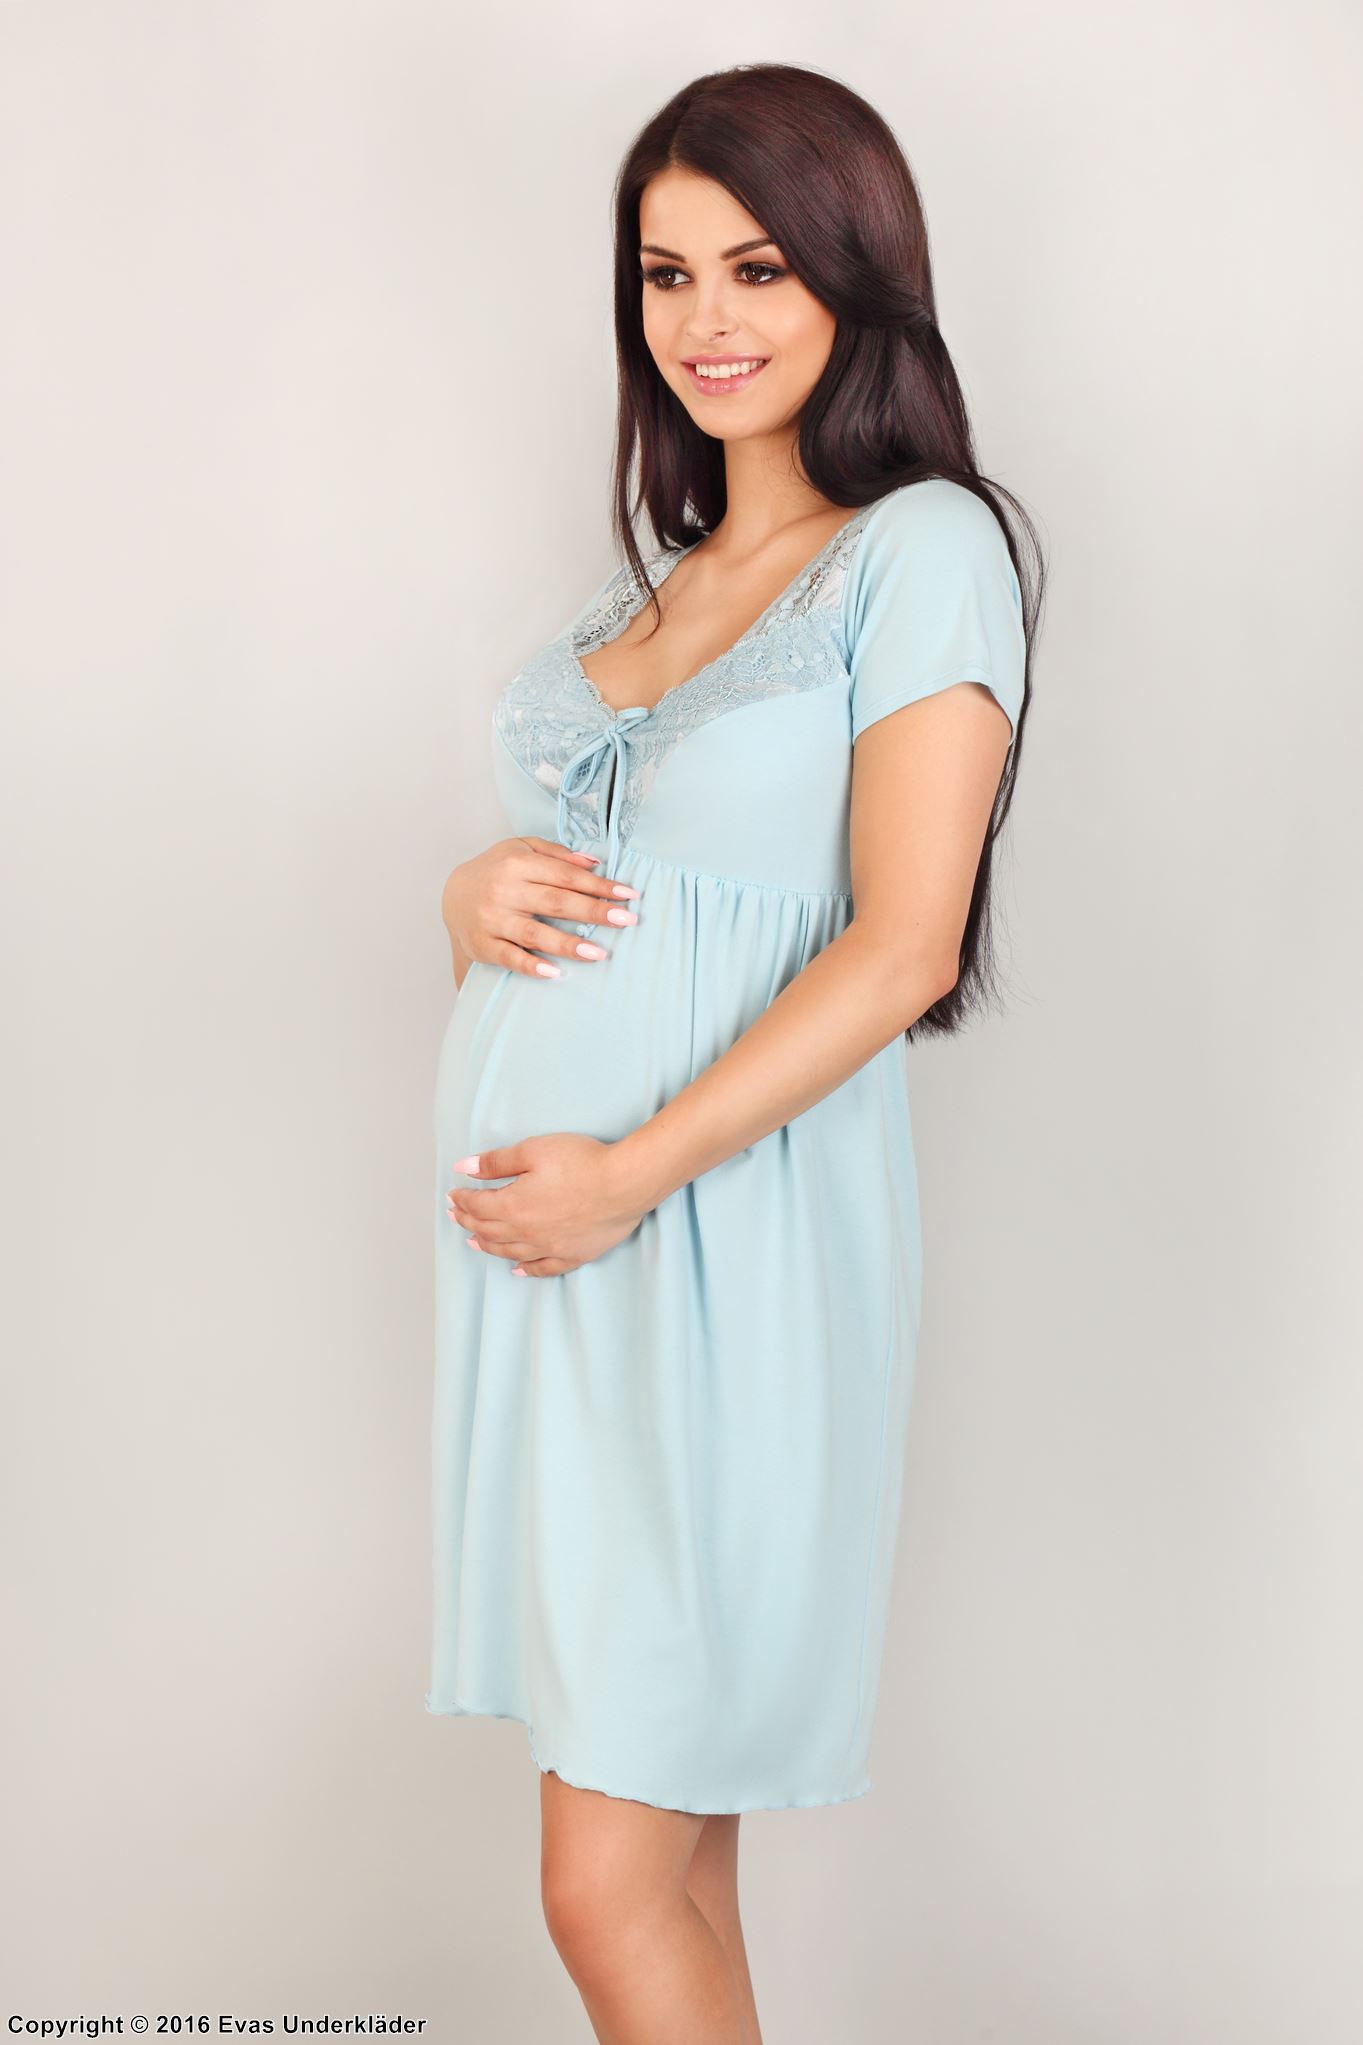 Maternity dress, lace overlay, short sleeves